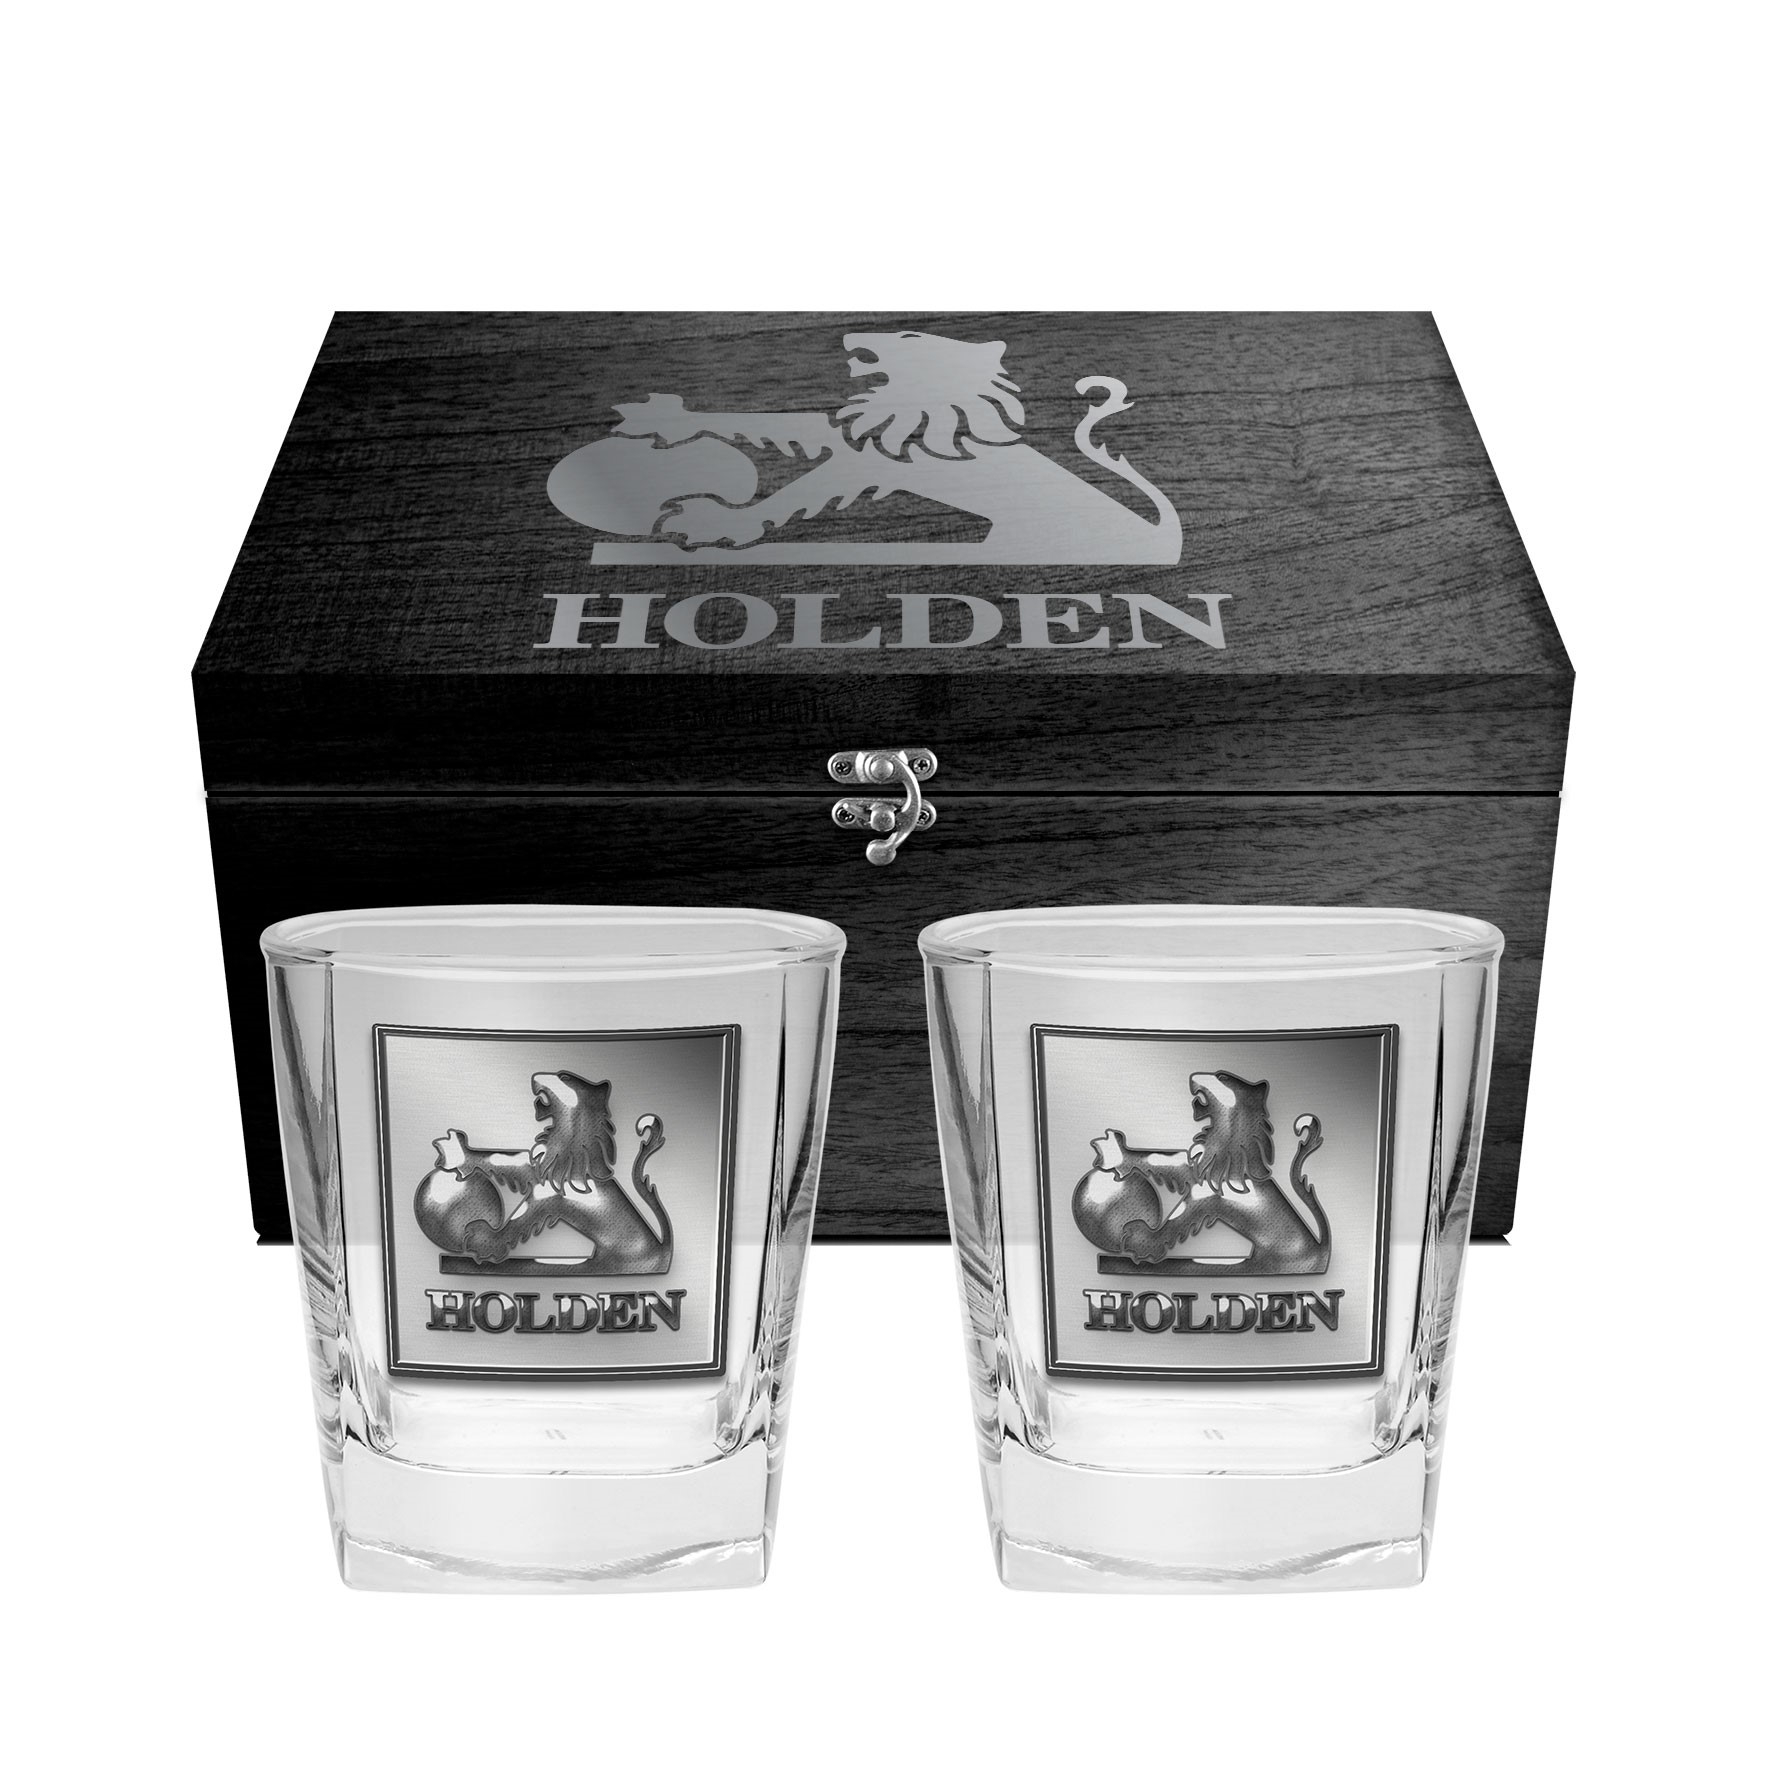 Holden Glasses In Wooden Box